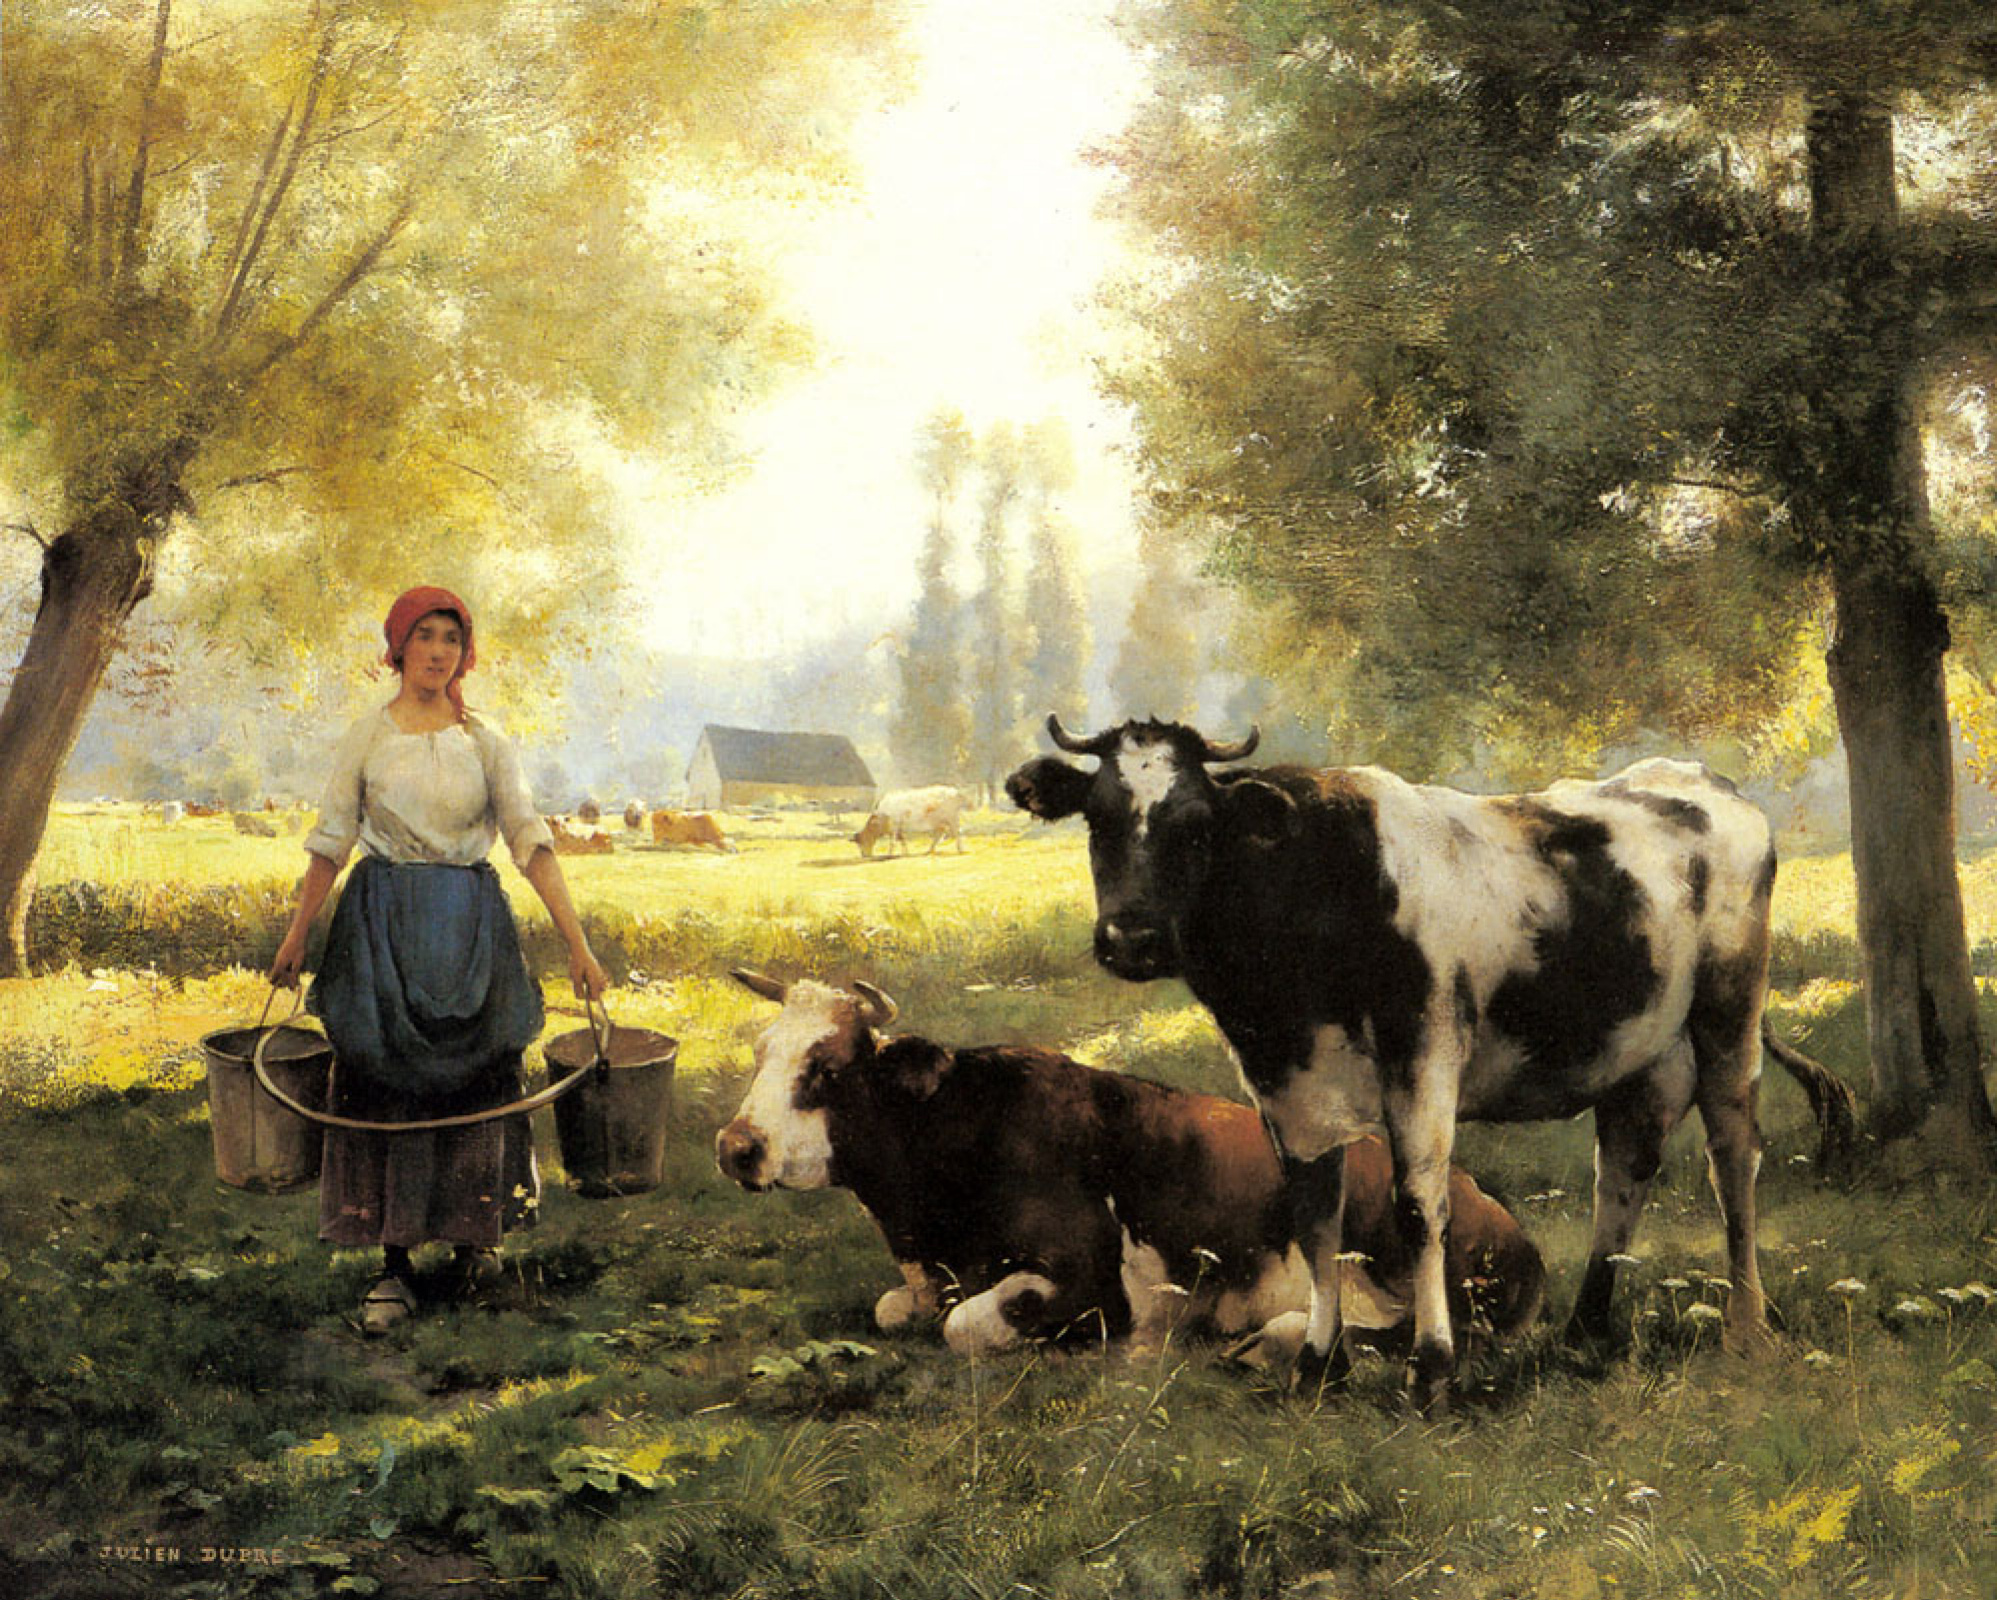 Человек е корову. Жюльен Дюпре (Julien Dupre), коровы. Жюльен Дюпре (1851-1910). Жюль Дюпре художник. Julien Dupré картины.